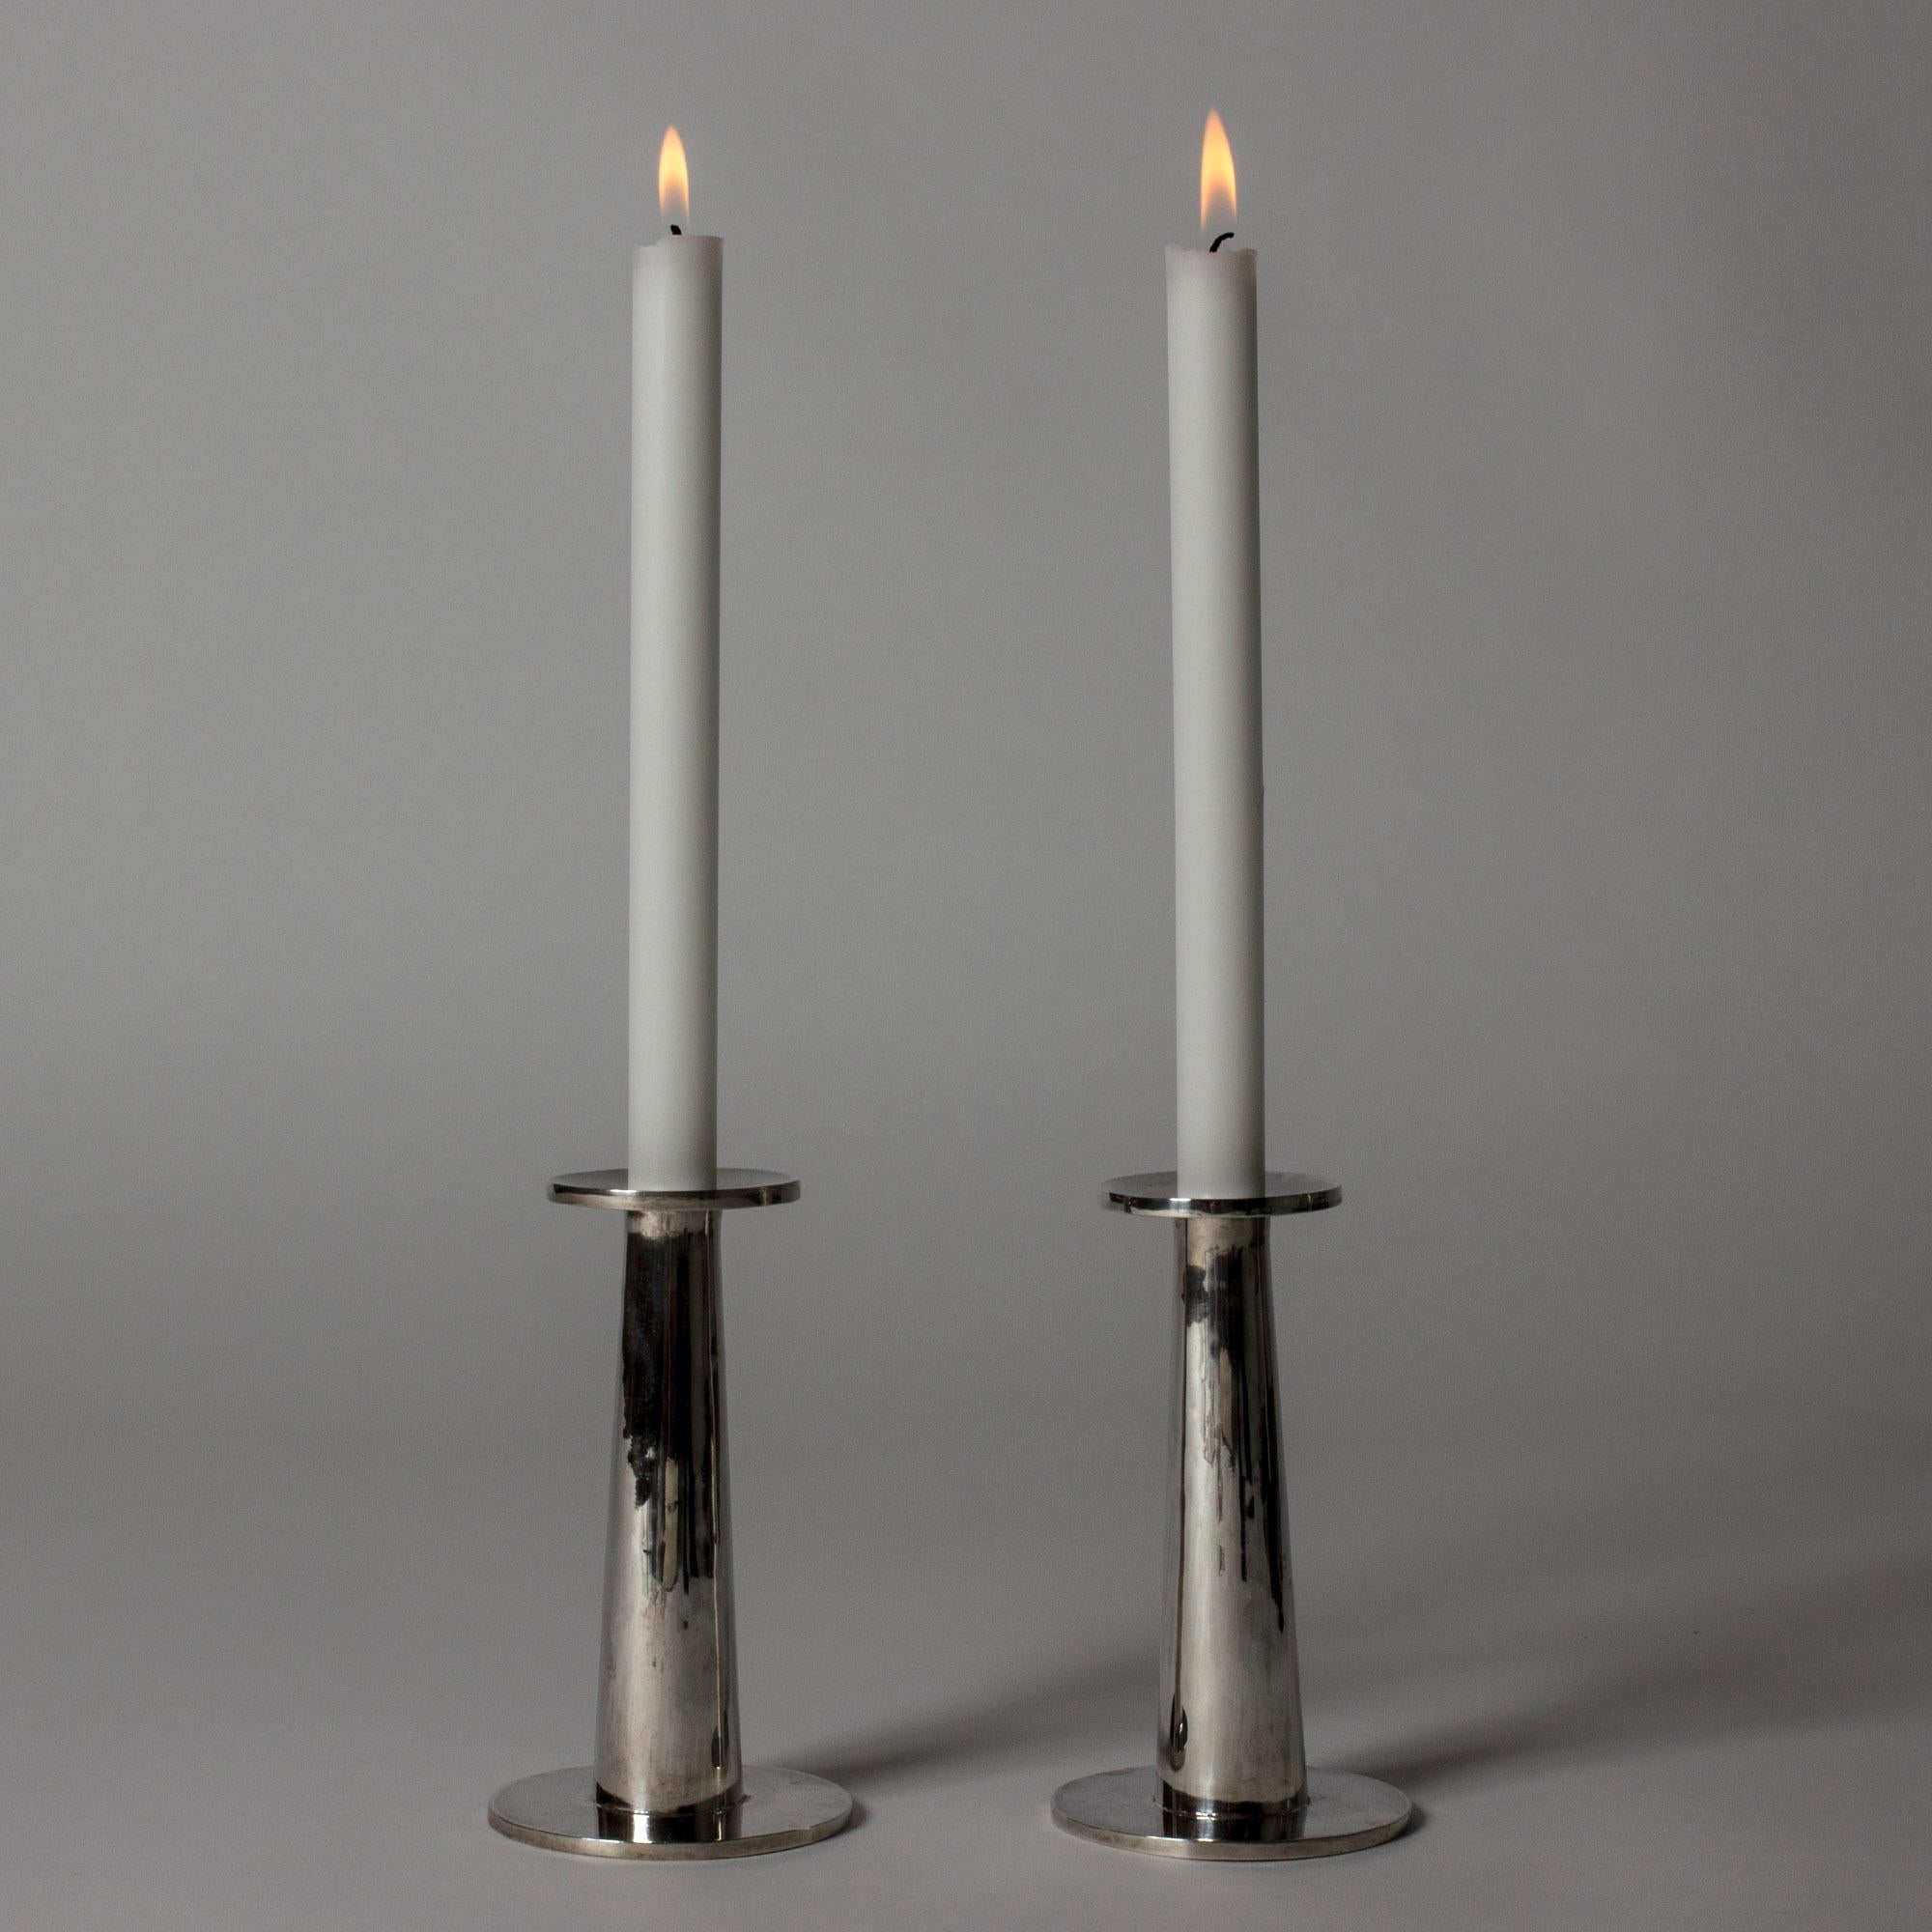 Pair of elegant silver candlesticks by Jarl Ölveborn, in a sleek modernist design. Hand hammered surface add a beautiful, subtle liveliness.